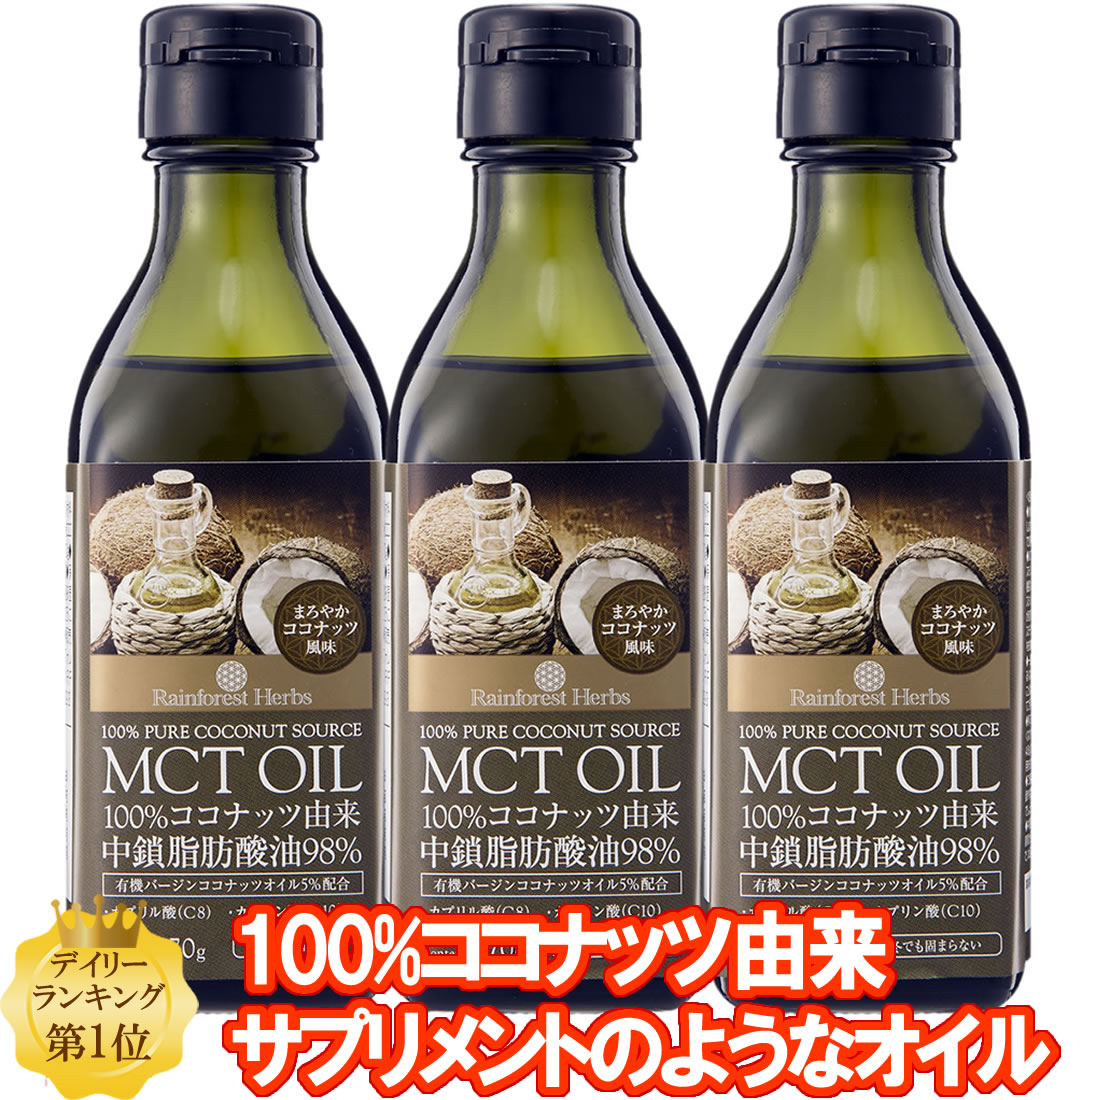 MCTオイル 170g 3本ココナッツ由来100% MCT オイル タイ産 ケトン体 ダイエット 中鎖脂肪酸 バターコー..